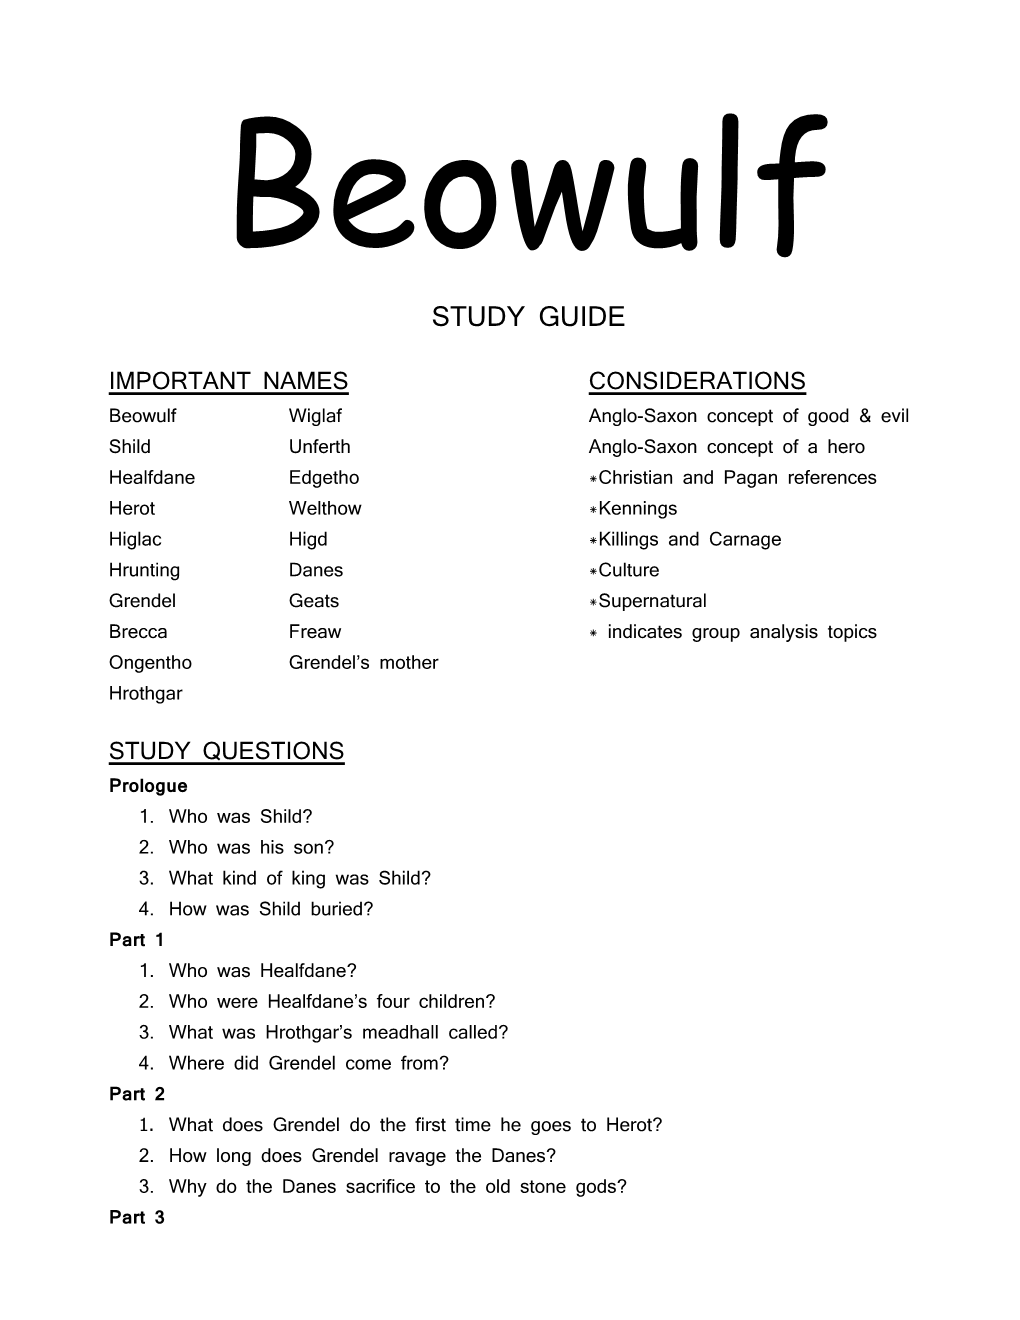 Beowulfwiglafanglo-Saxon Concept of Good & Evil